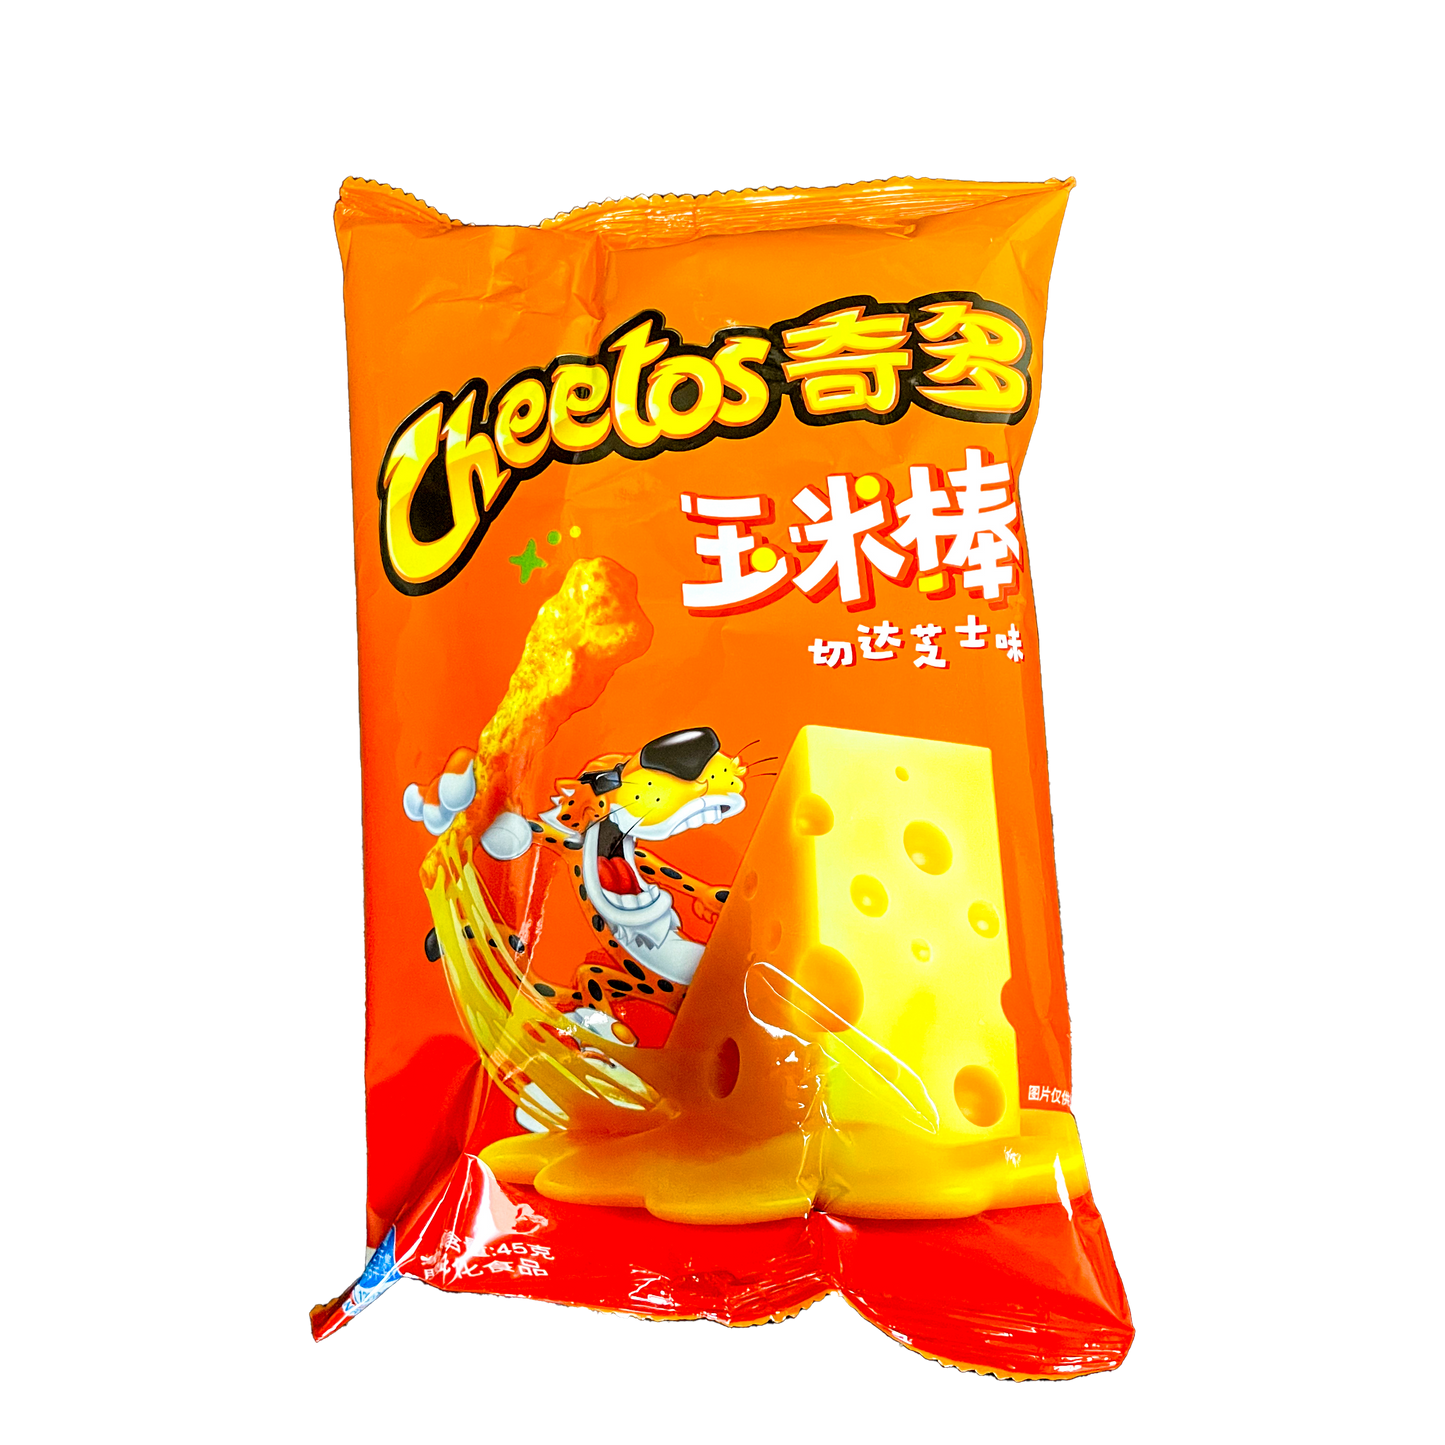 Cheetos Cheddar Cheese